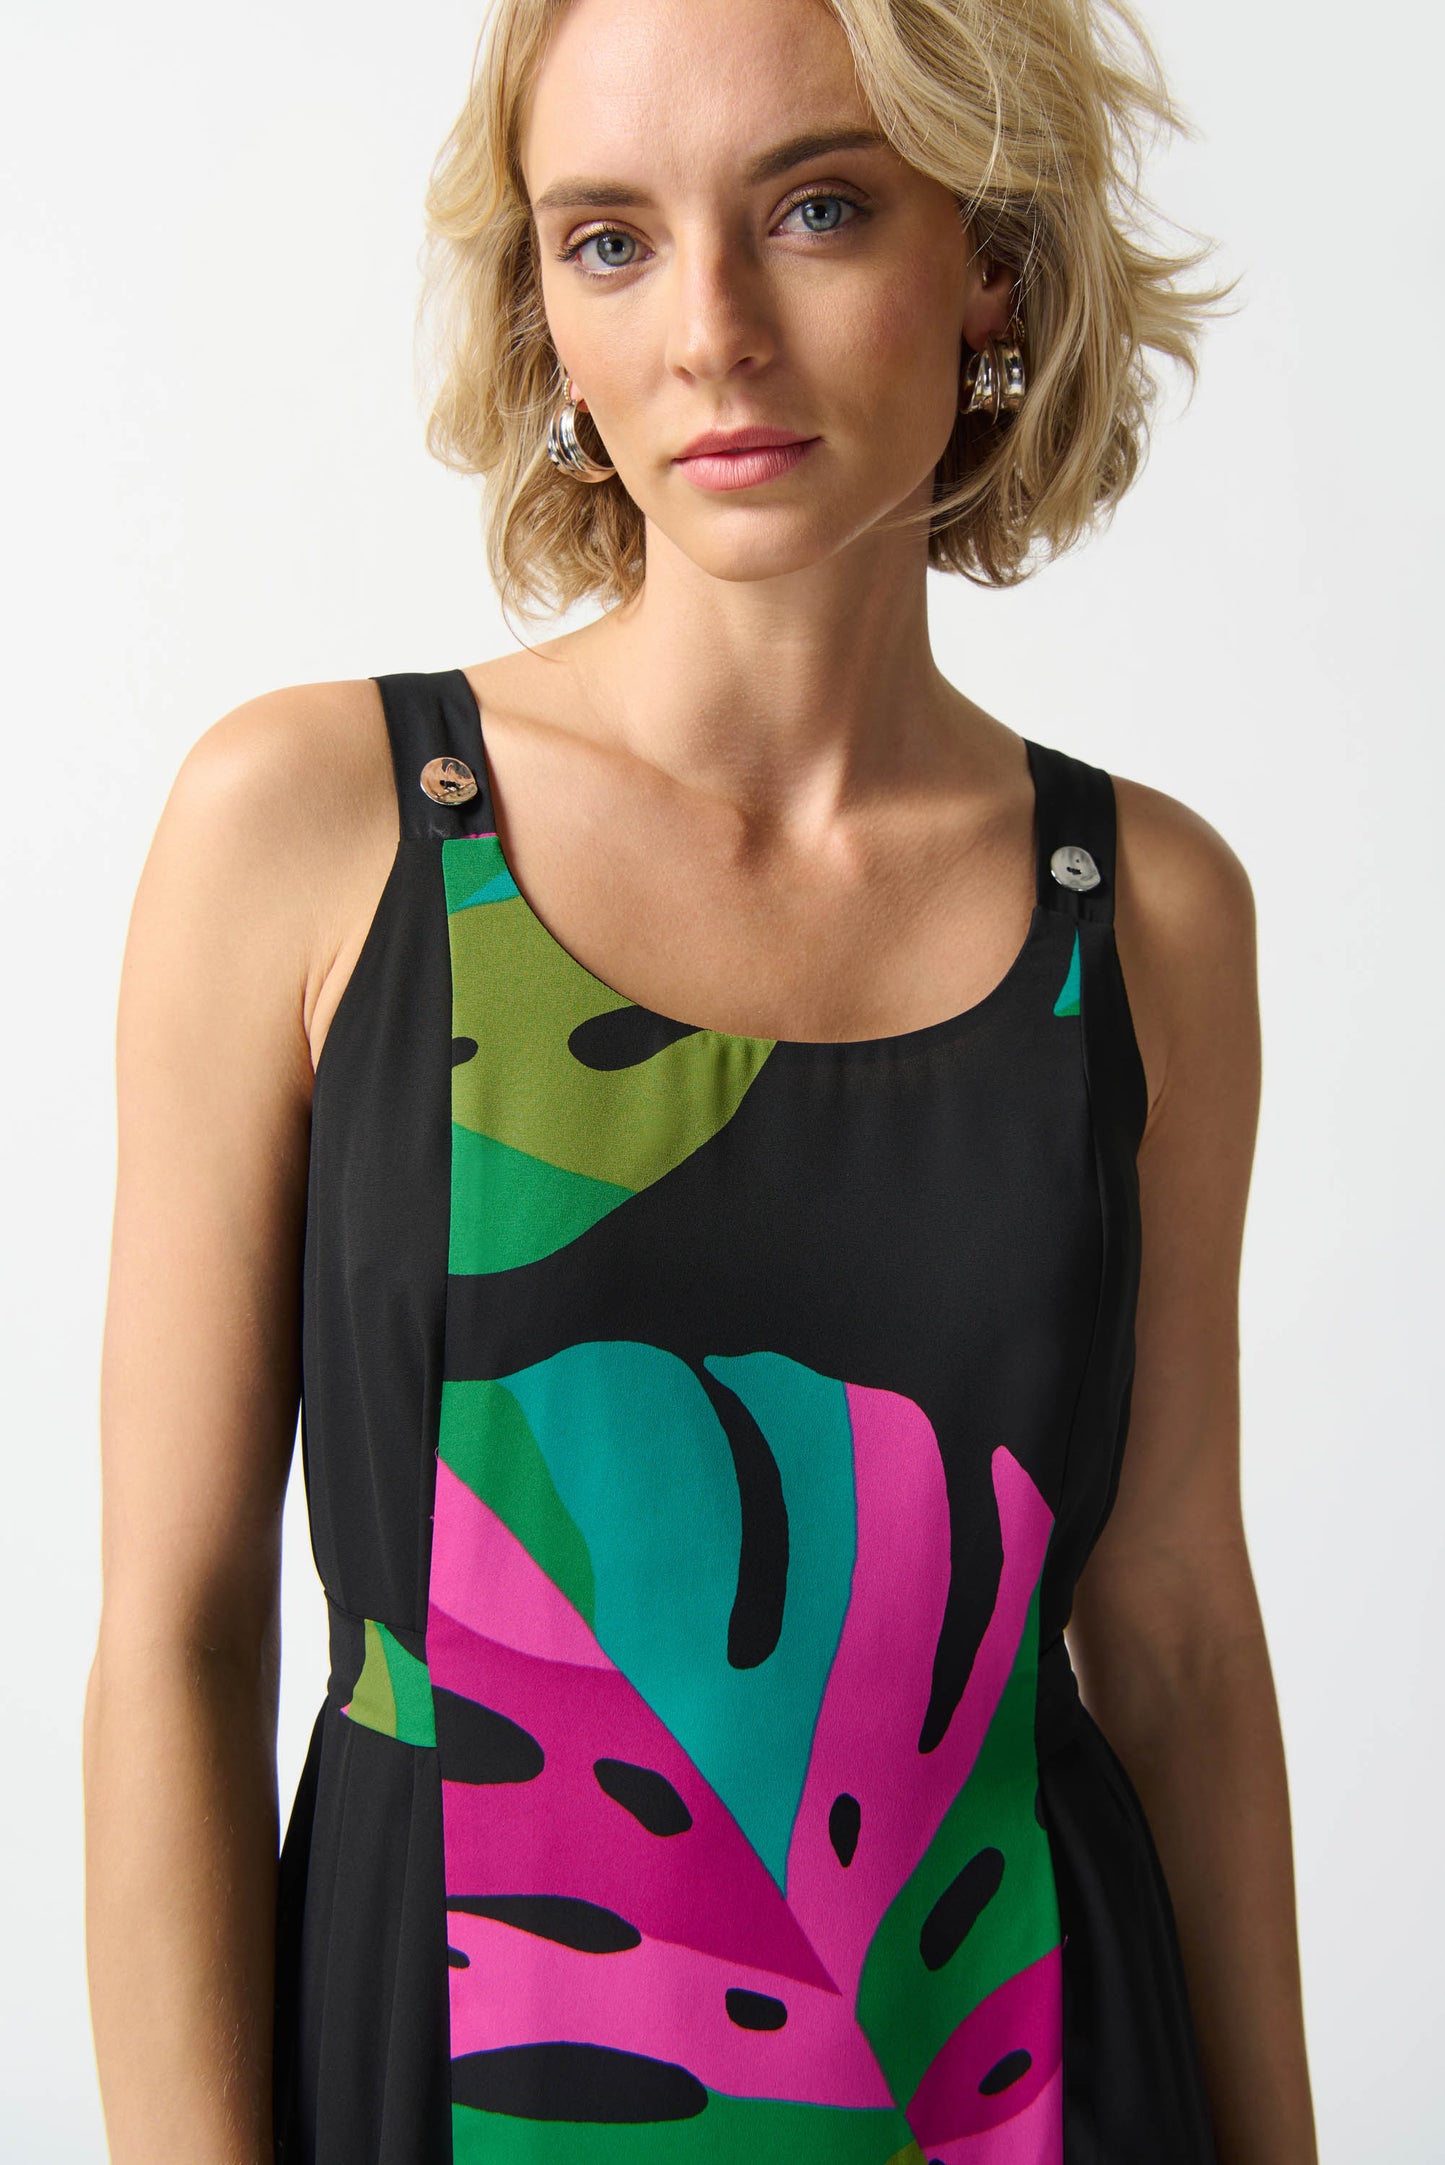 Georgette Tropical Print Dress
242163